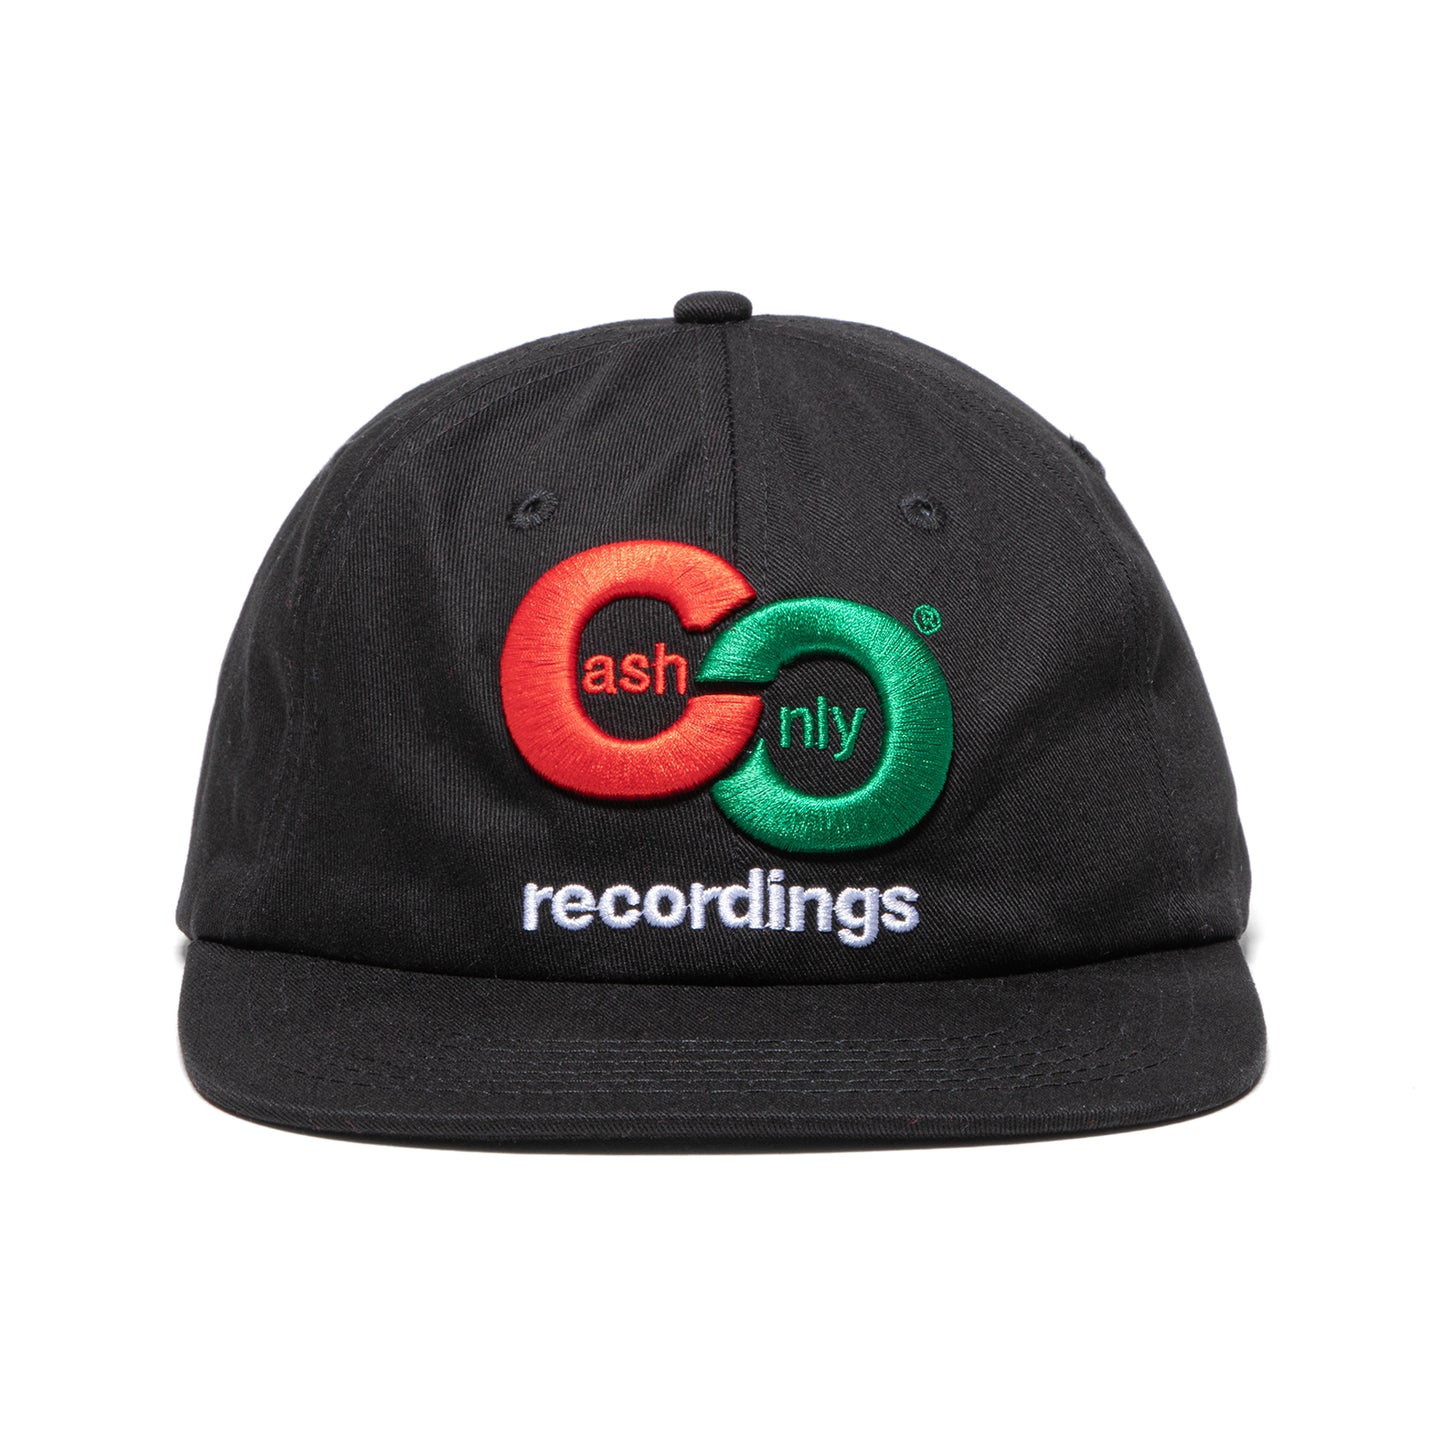 Cash Only Recordings 6 Panel Cap (Black)